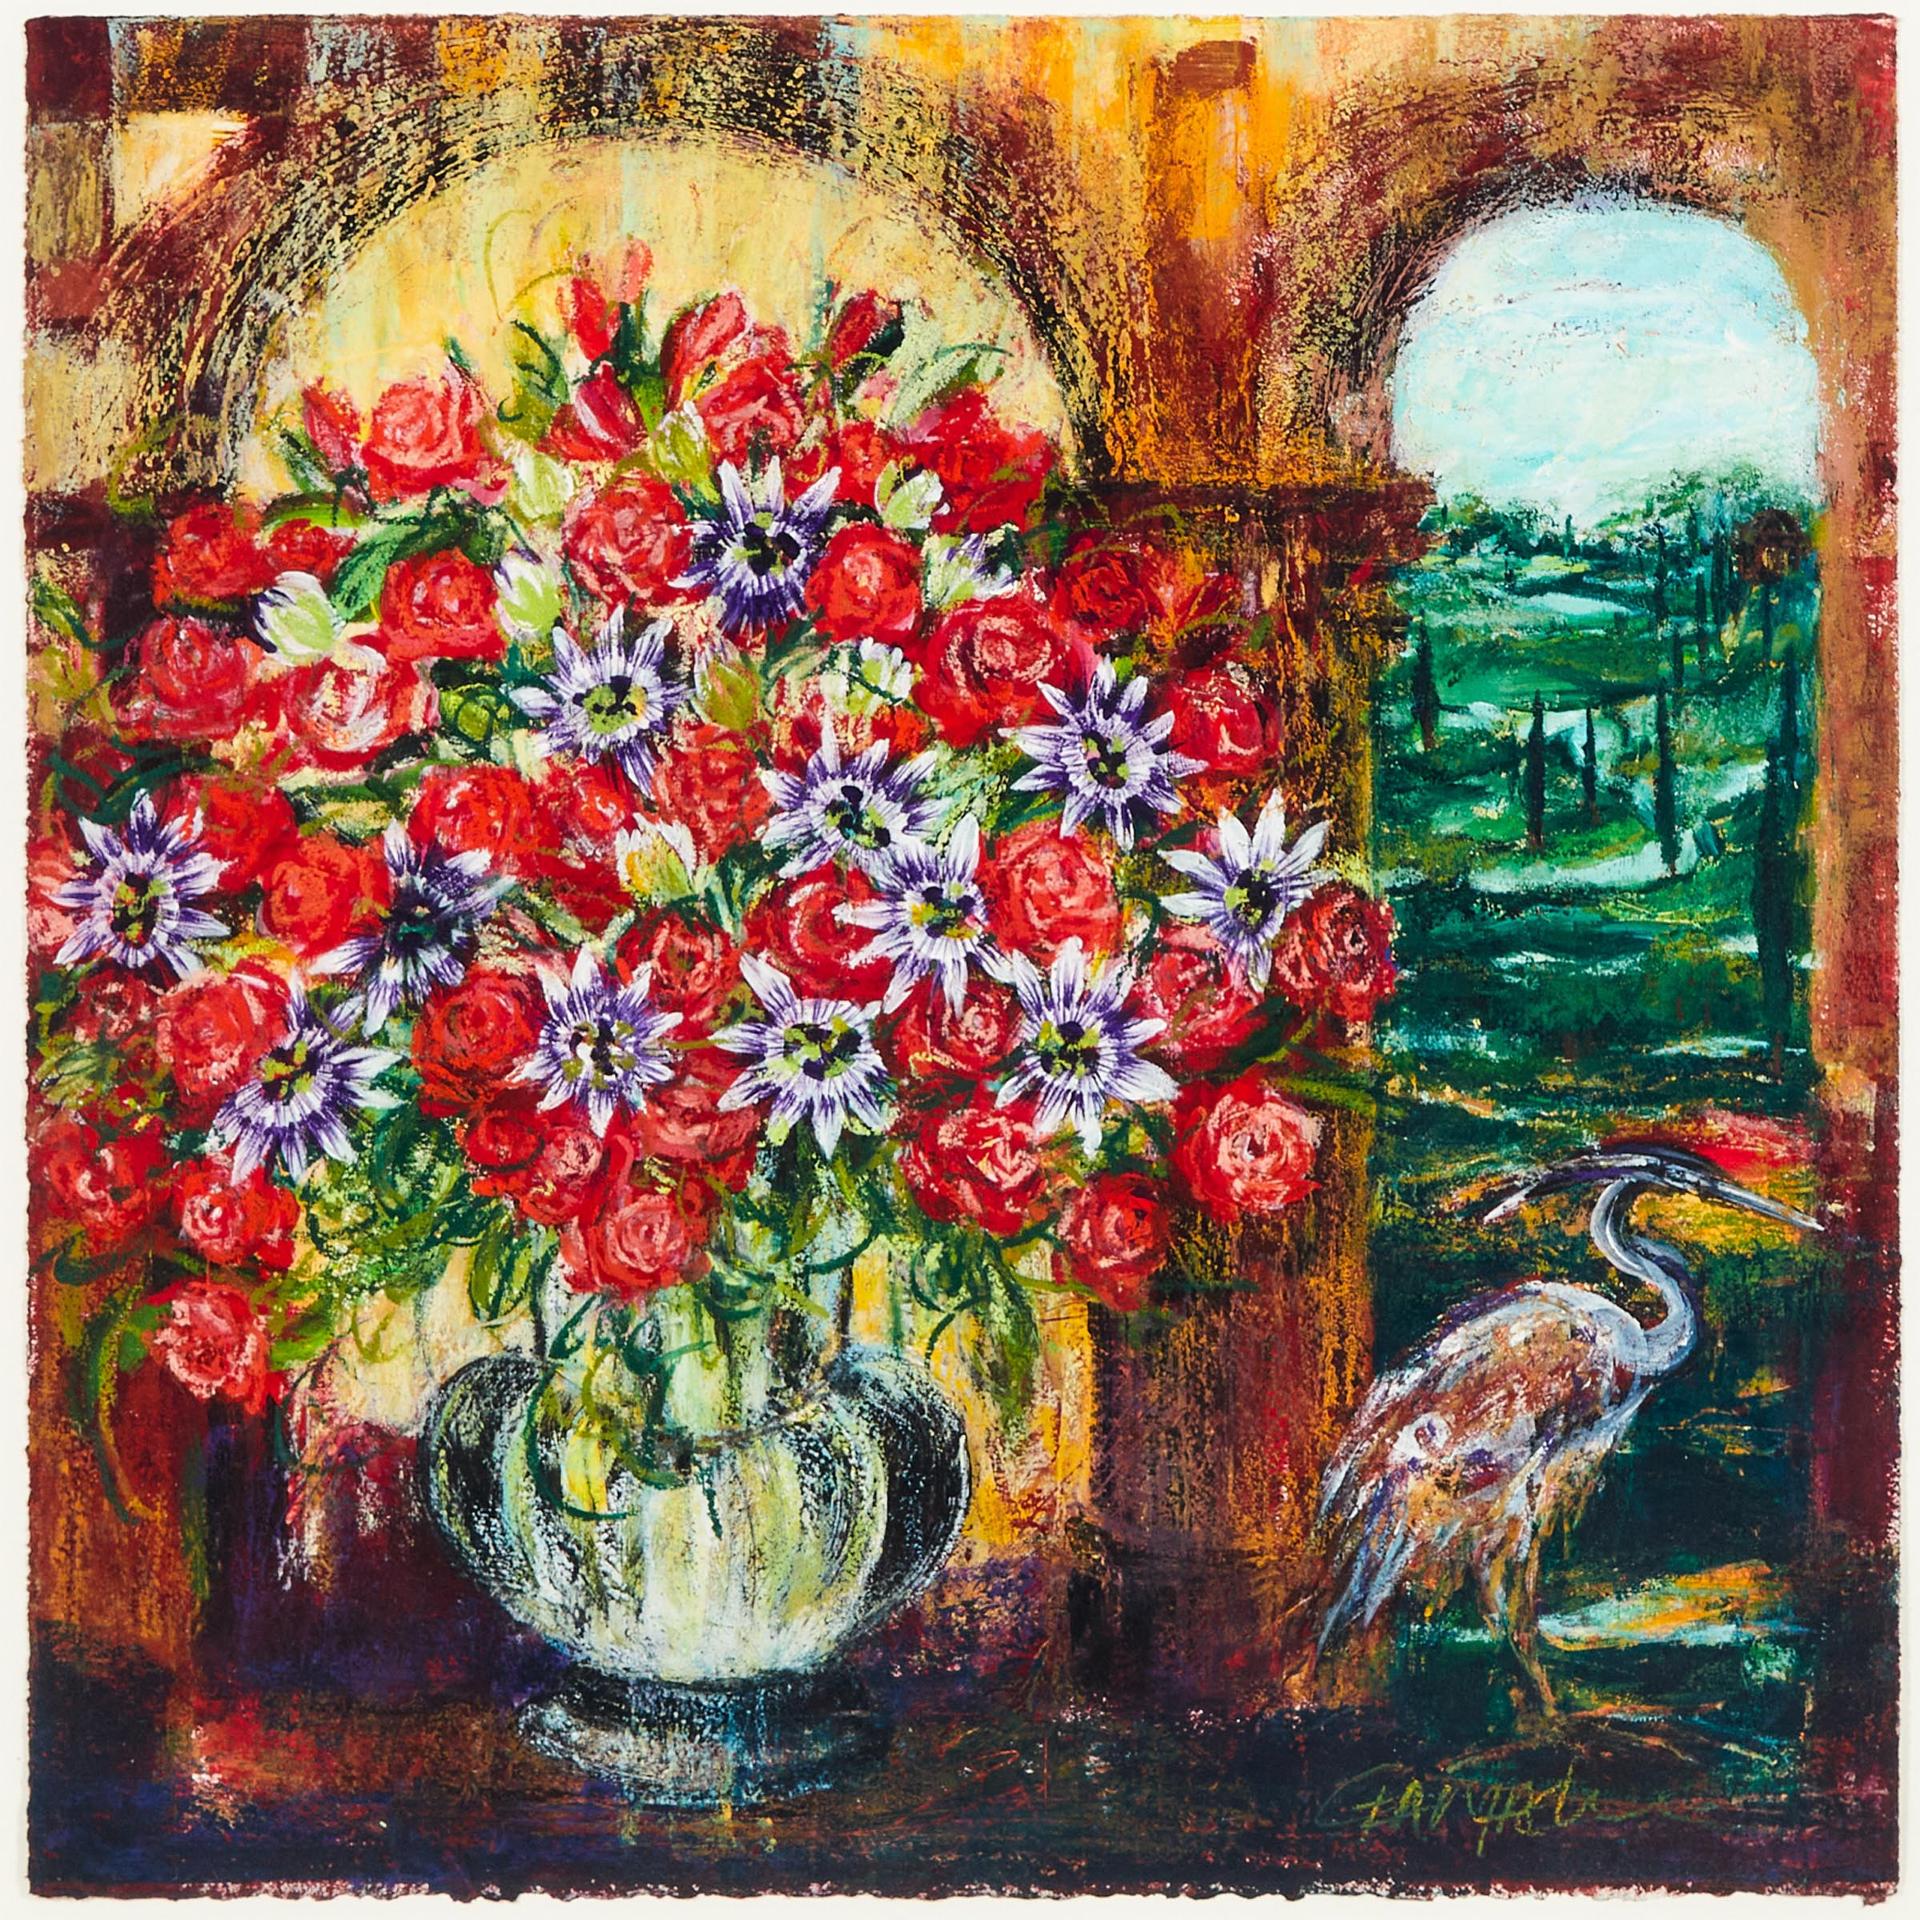 Élène Gamache (1951) - Red Roses With Heron, 2001